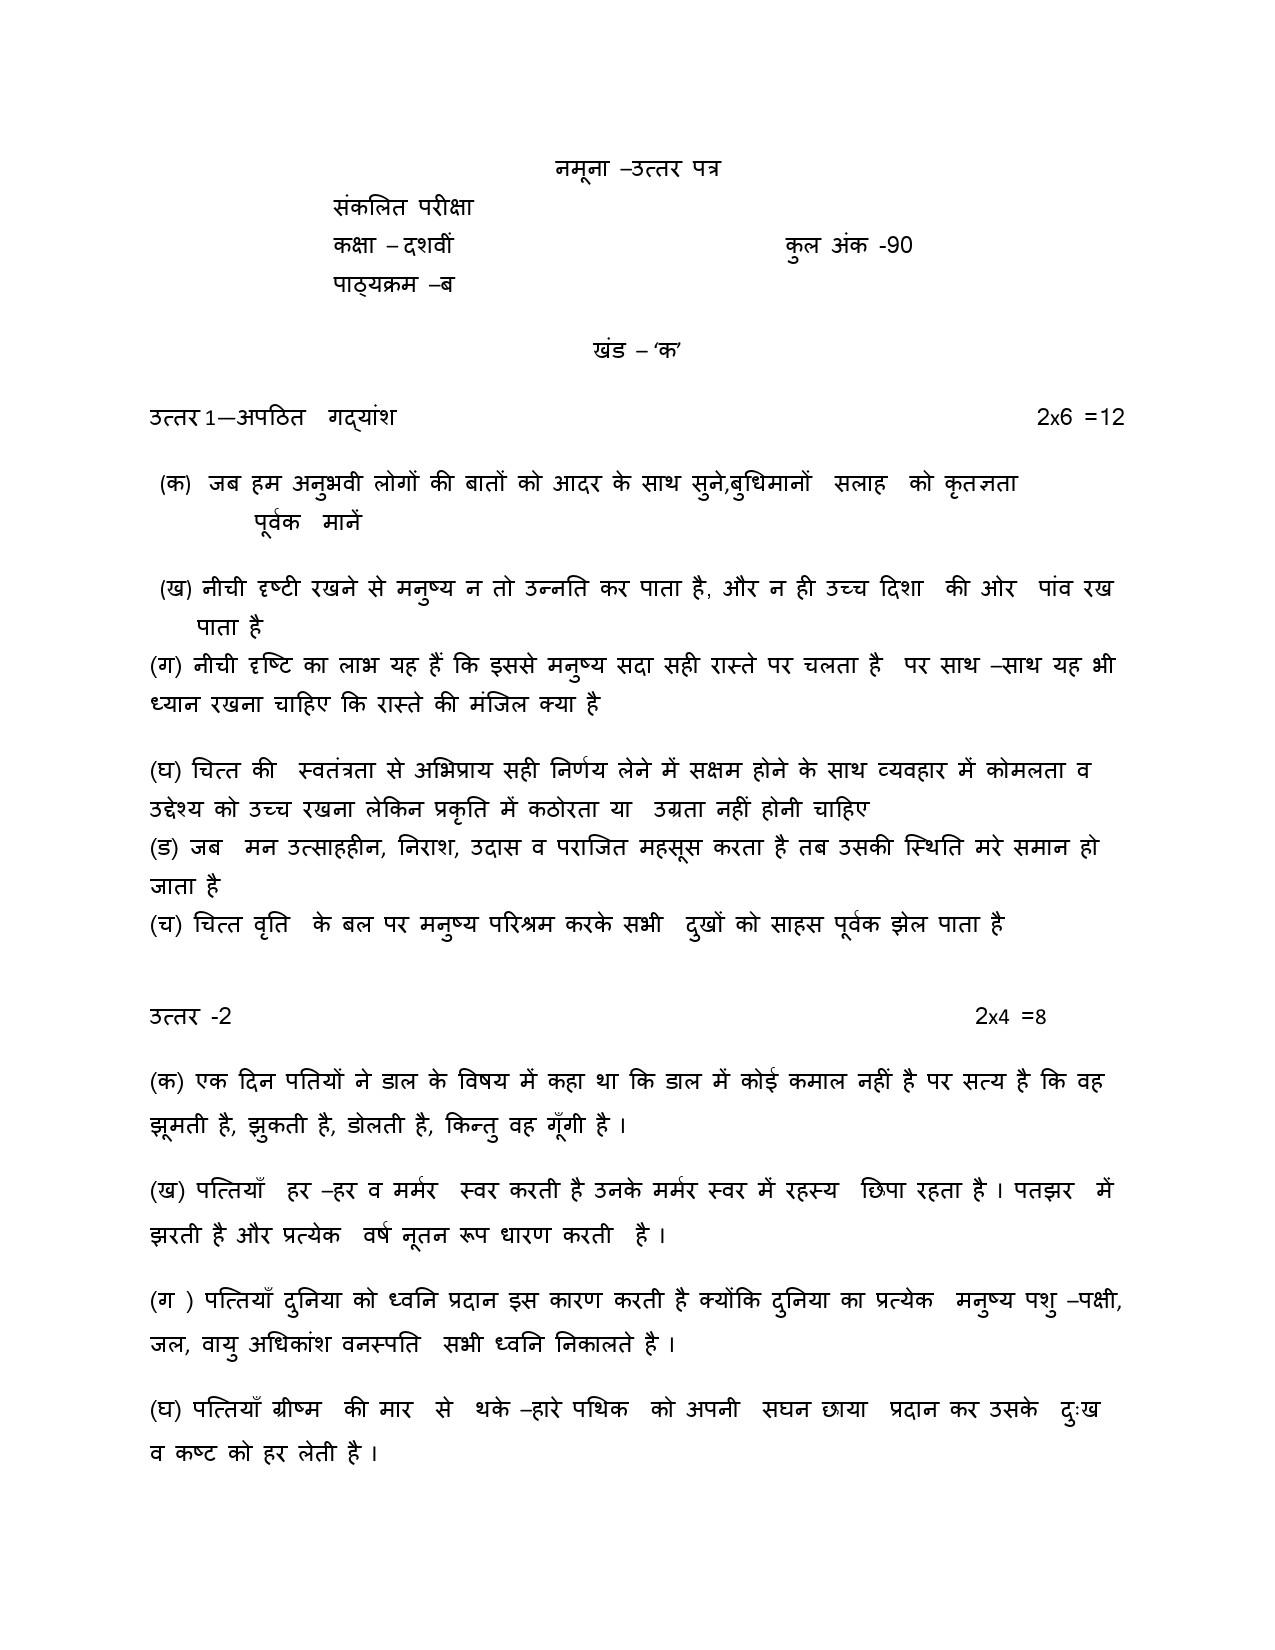 Hindi B CBSE Class X Sample Question Paper 2015 16 - Image 6